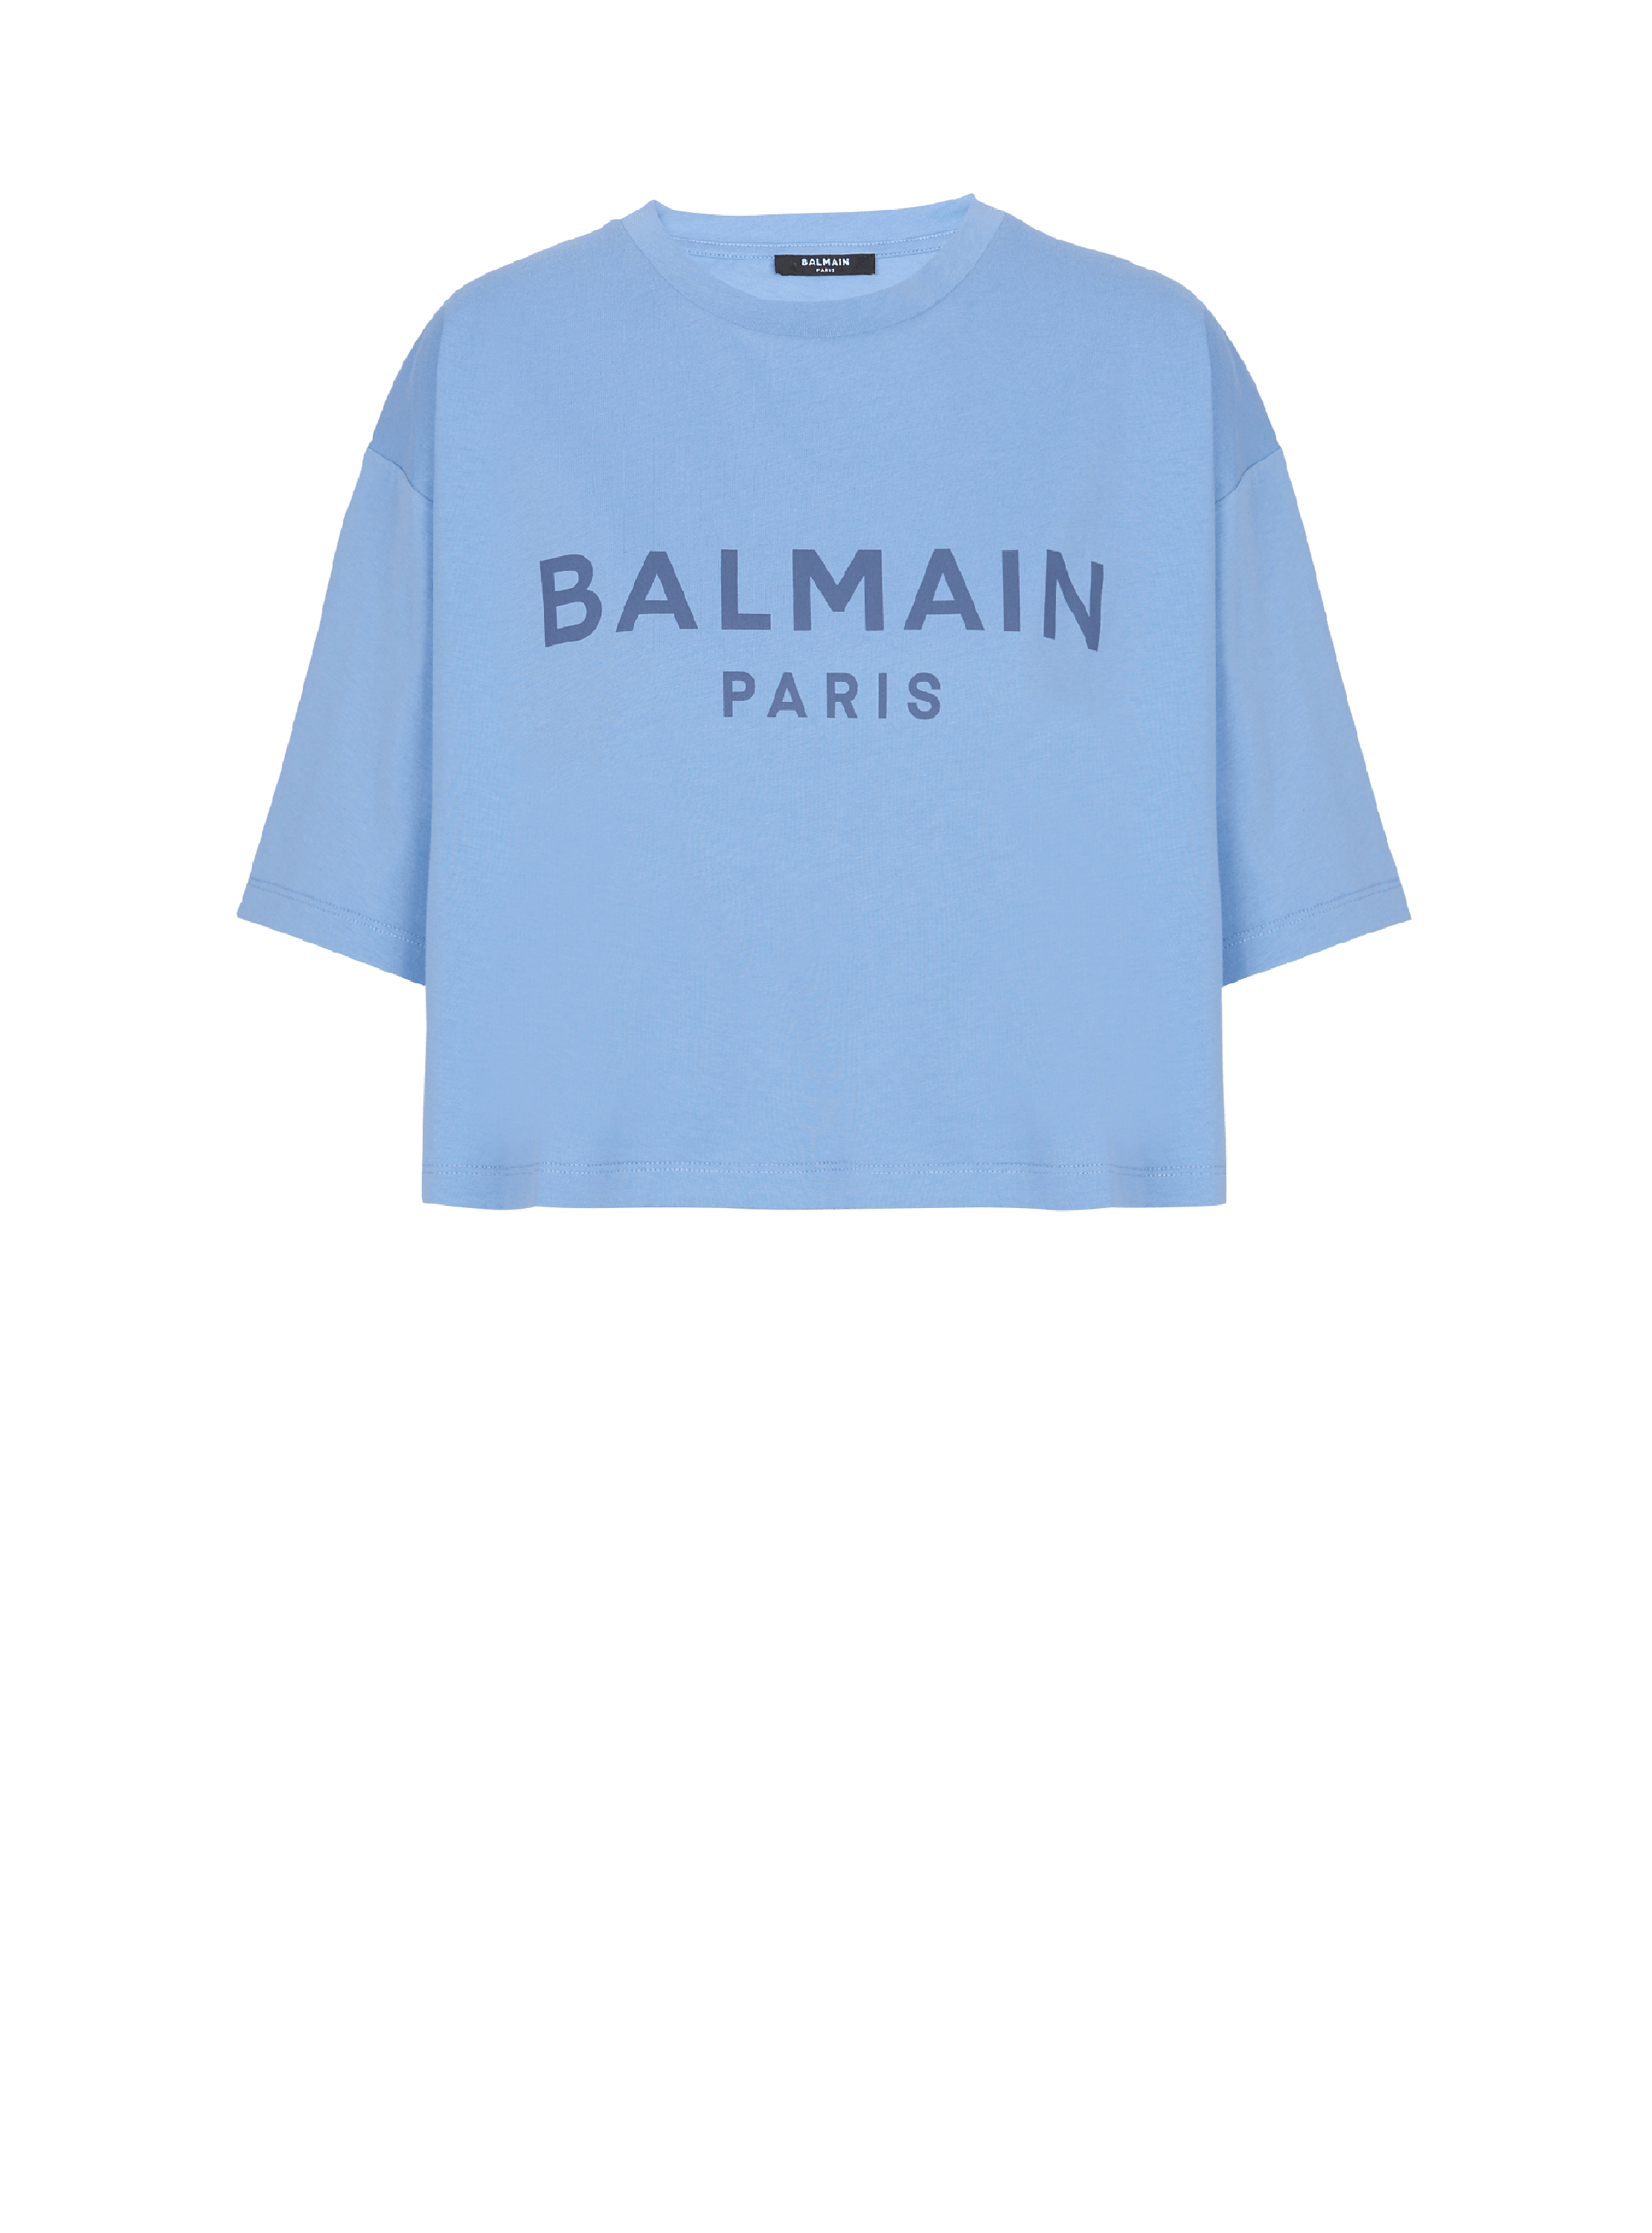 Cropped printed Balmain logo T-shirt, blue, hi-res